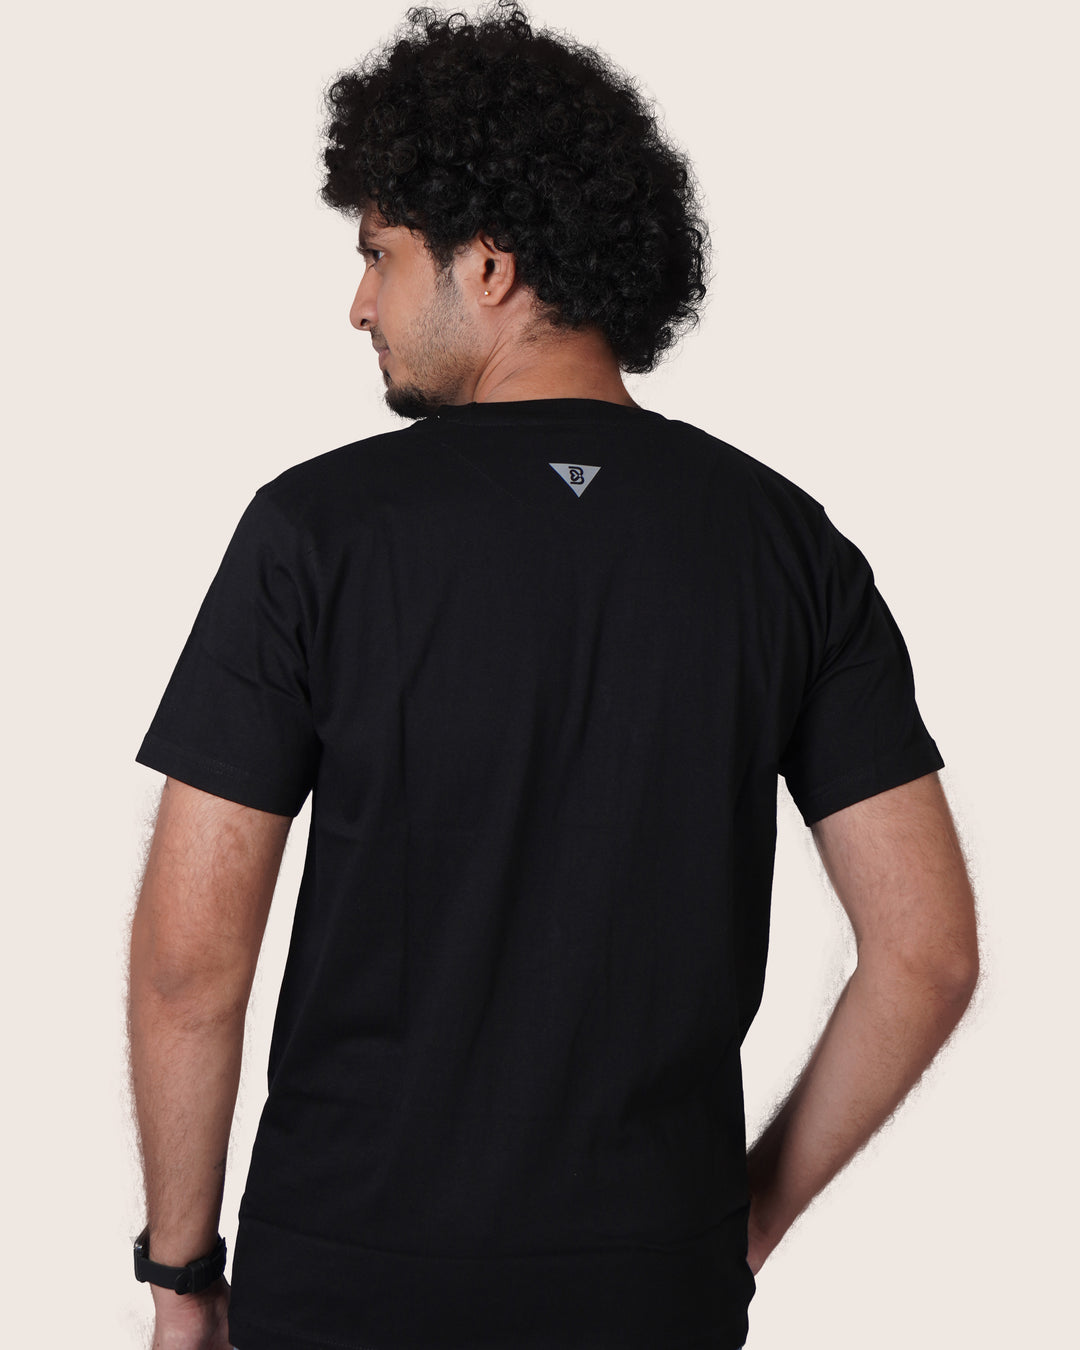 Feathersoft Home Comfort Men's Crewneck T-Shirt: Coal Black